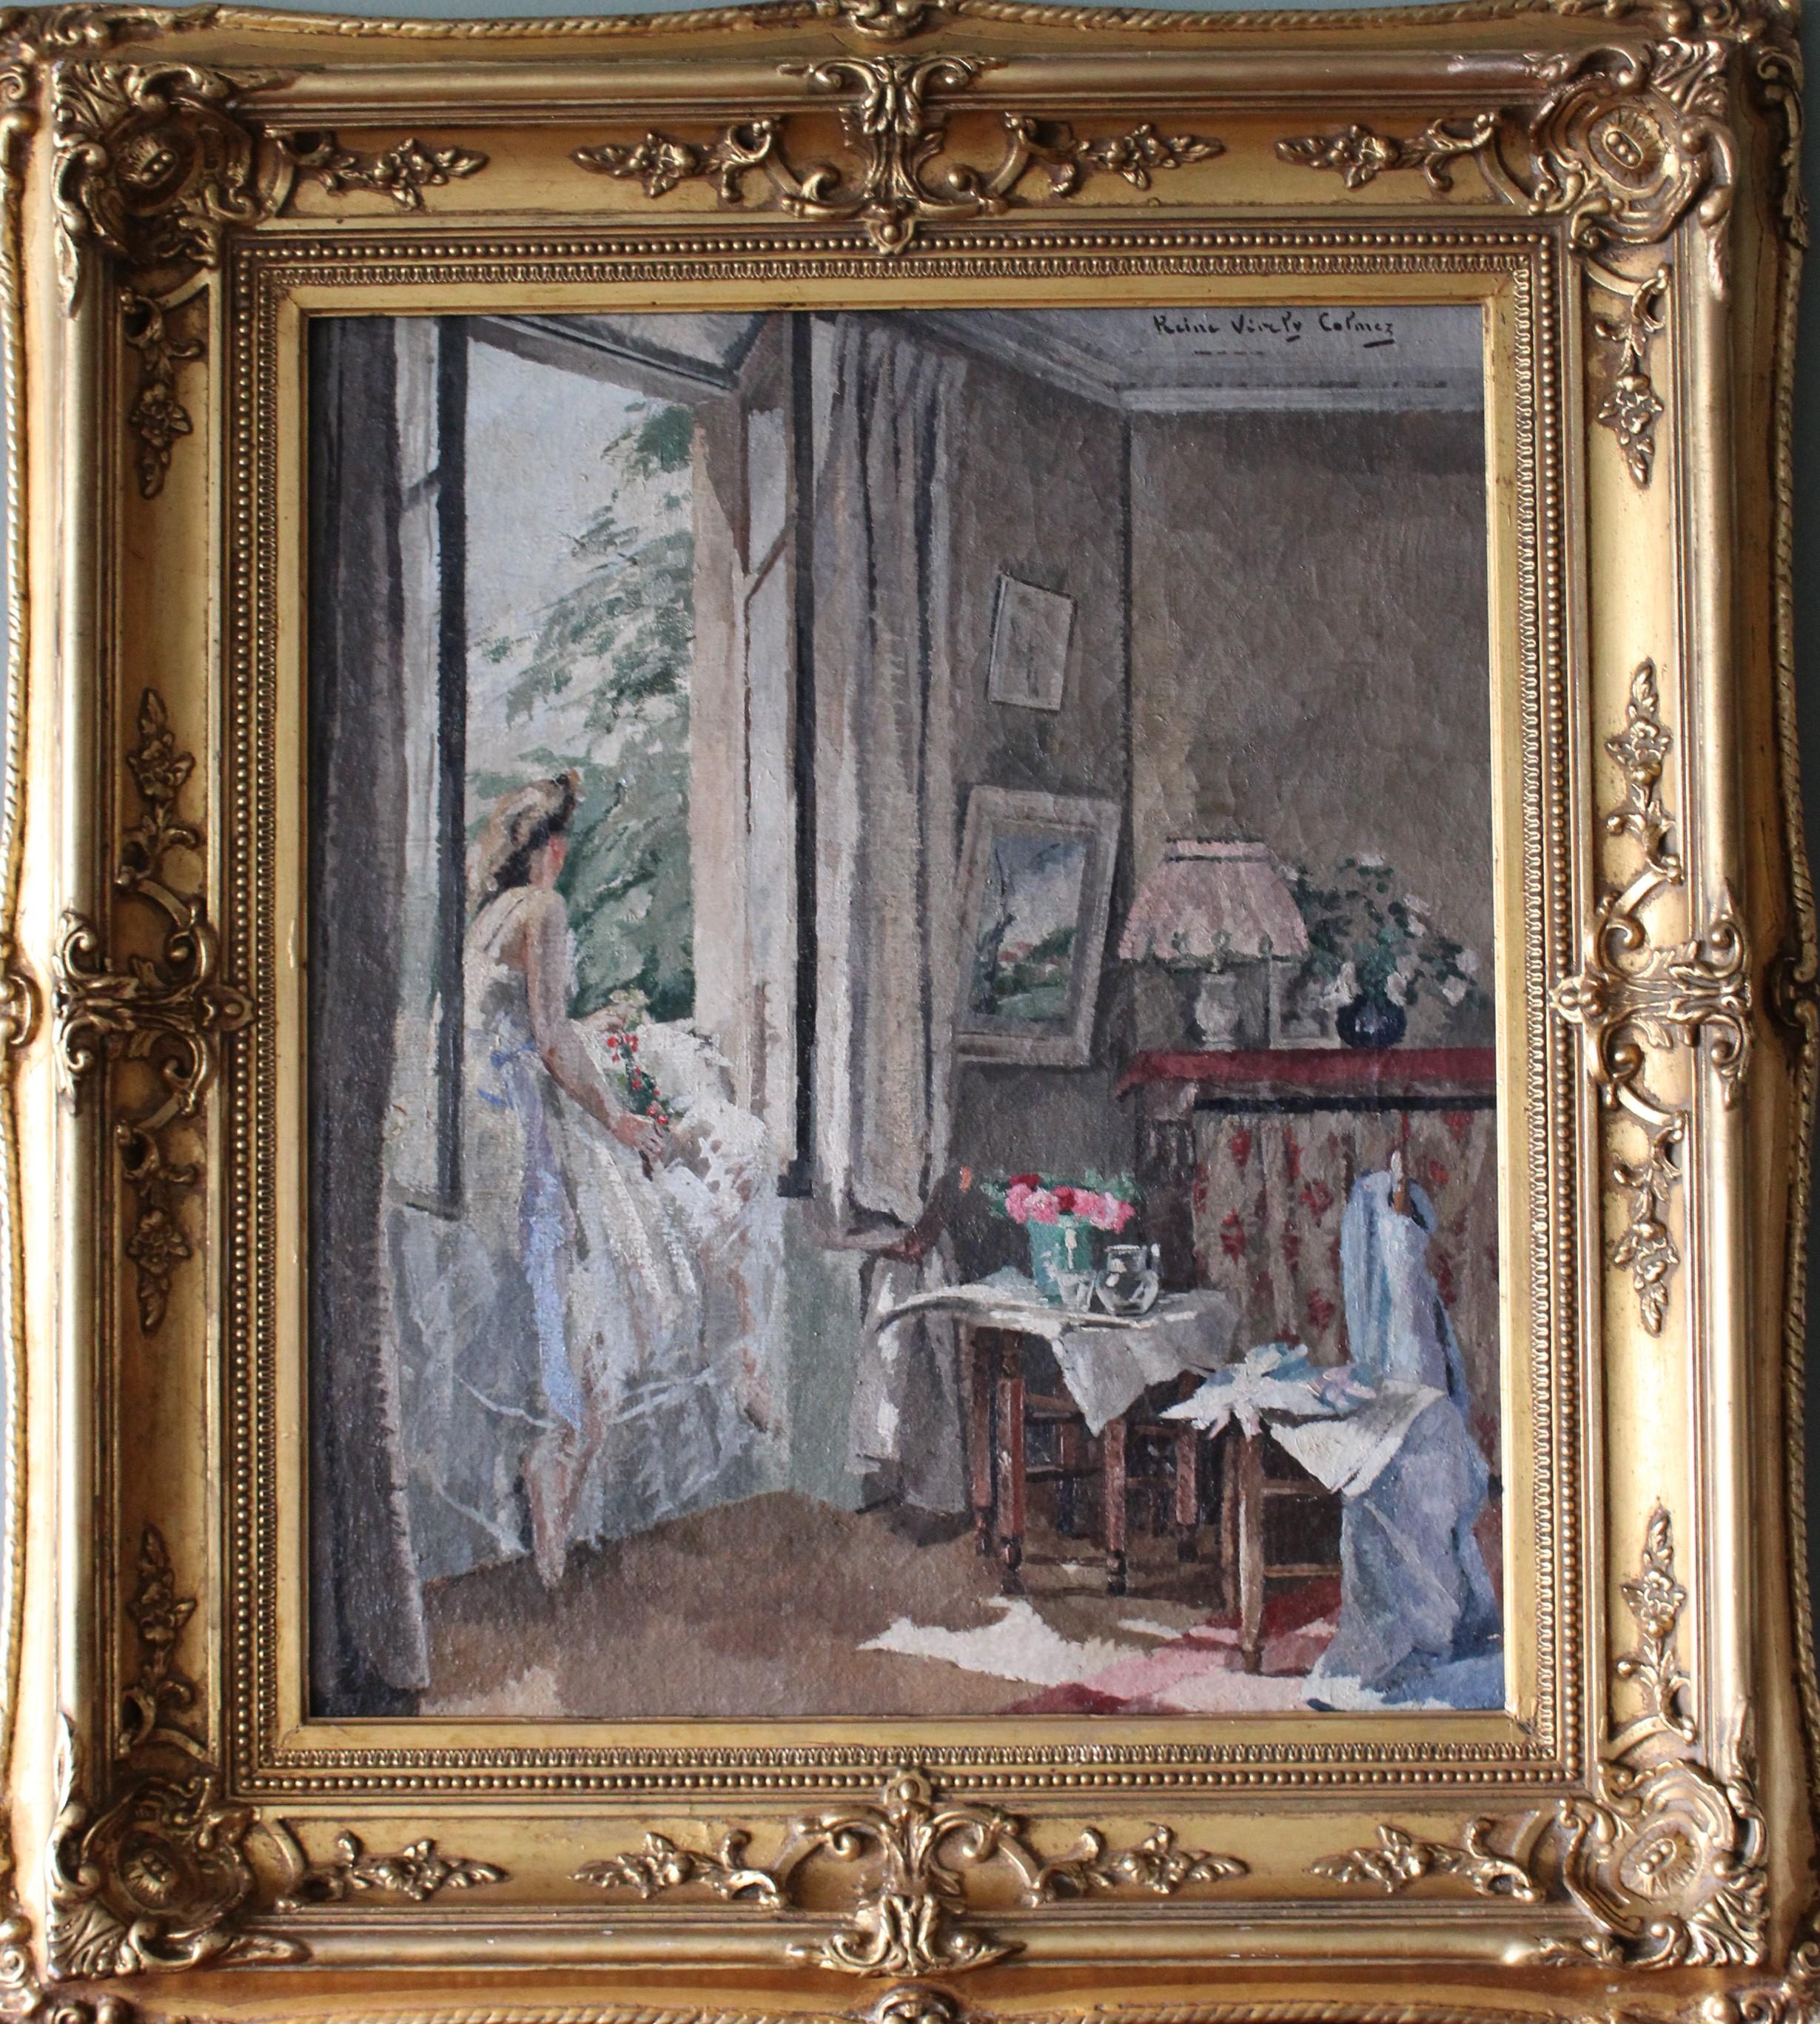 Reine Virely Calmez Interior Painting - Vintage post-impressionist painting of a ballerina, figurative interior scene